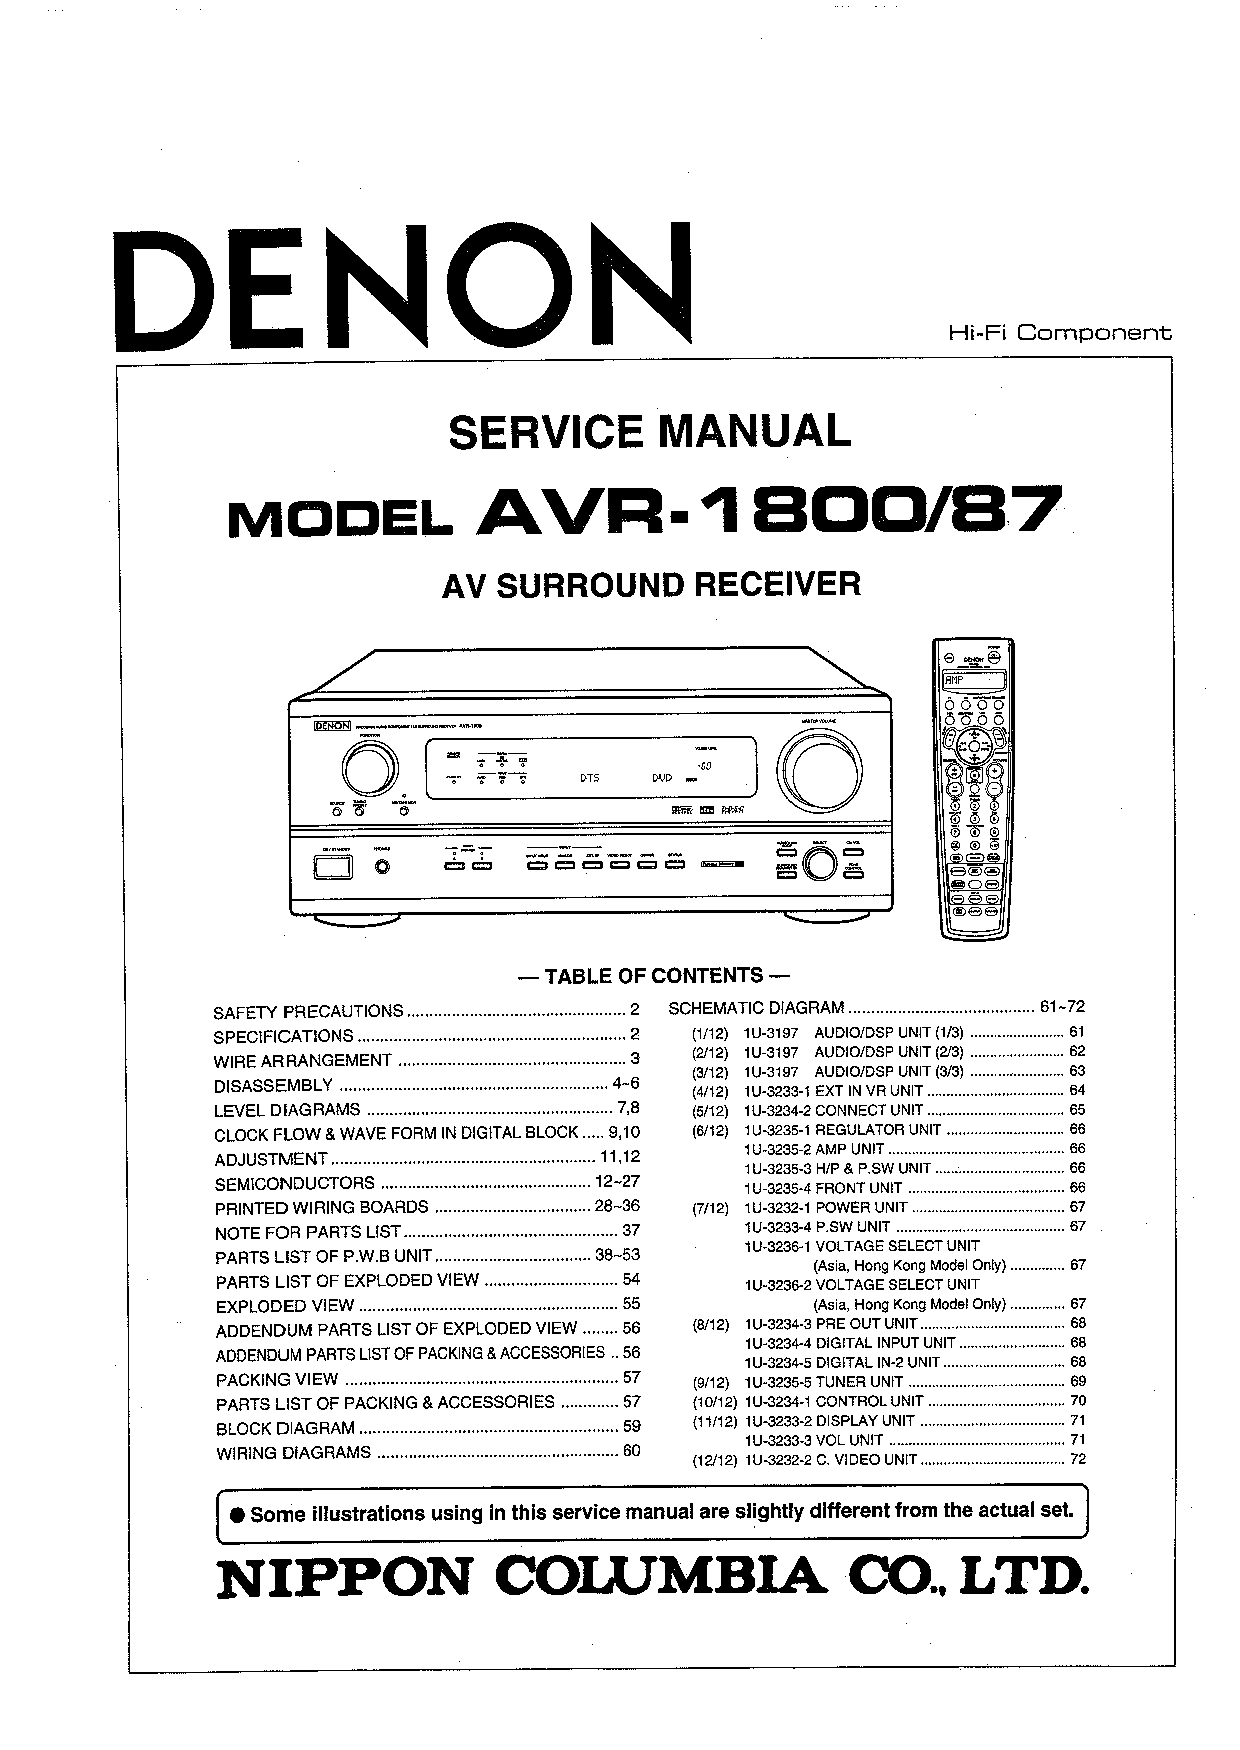 Denon AVR-1800 Service Manual